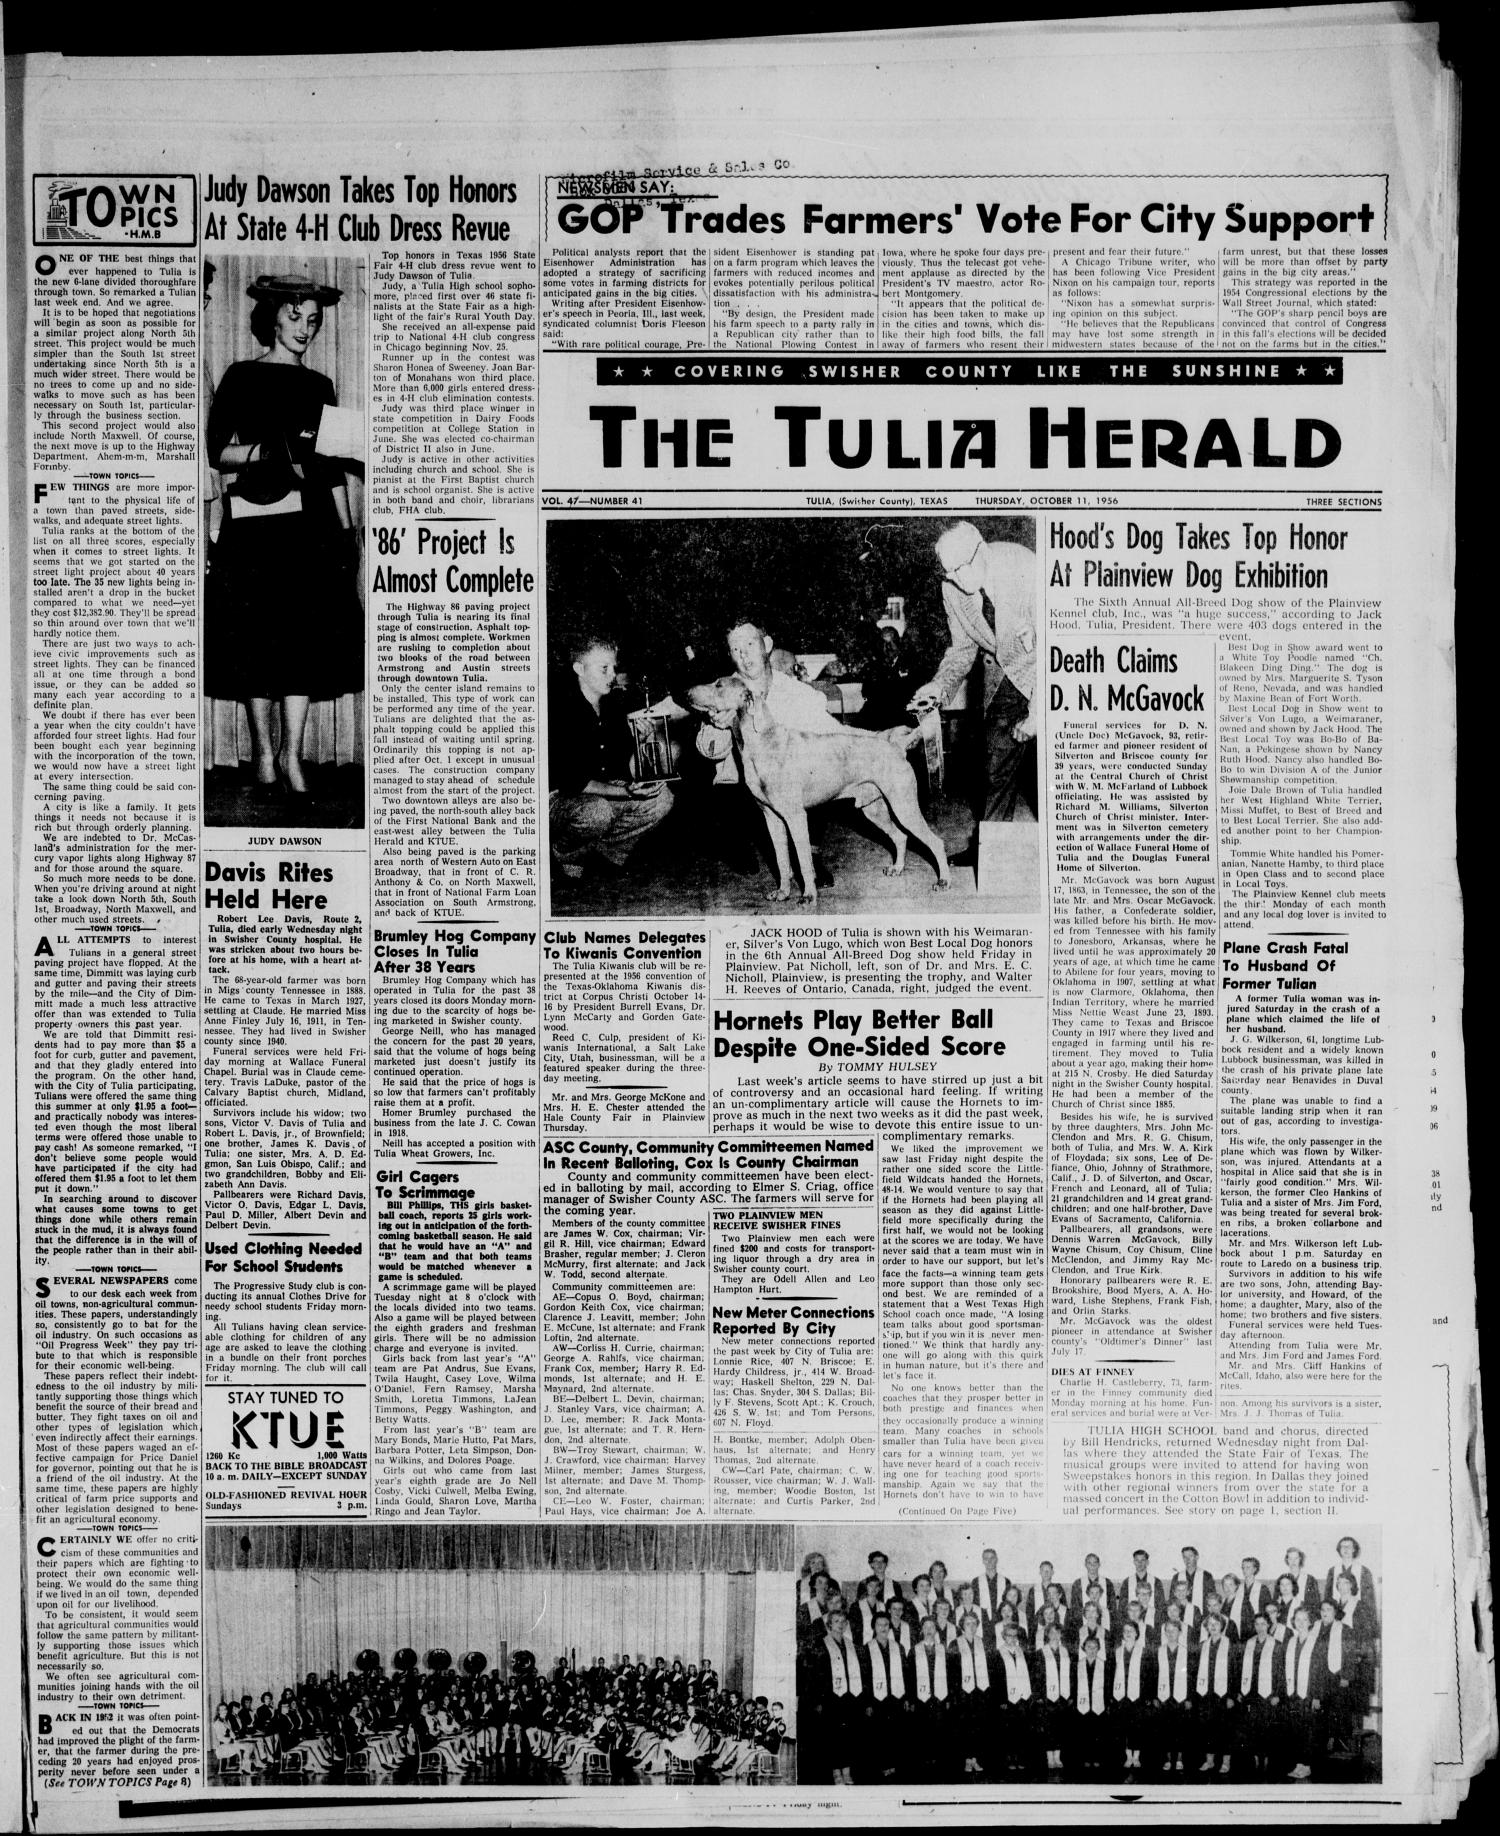 The Tulia Herald (Tulia, Tex), Vol. 47, No. 41, Ed. 1, Thursday, October 11, 1956
                                                
                                                    1
                                                